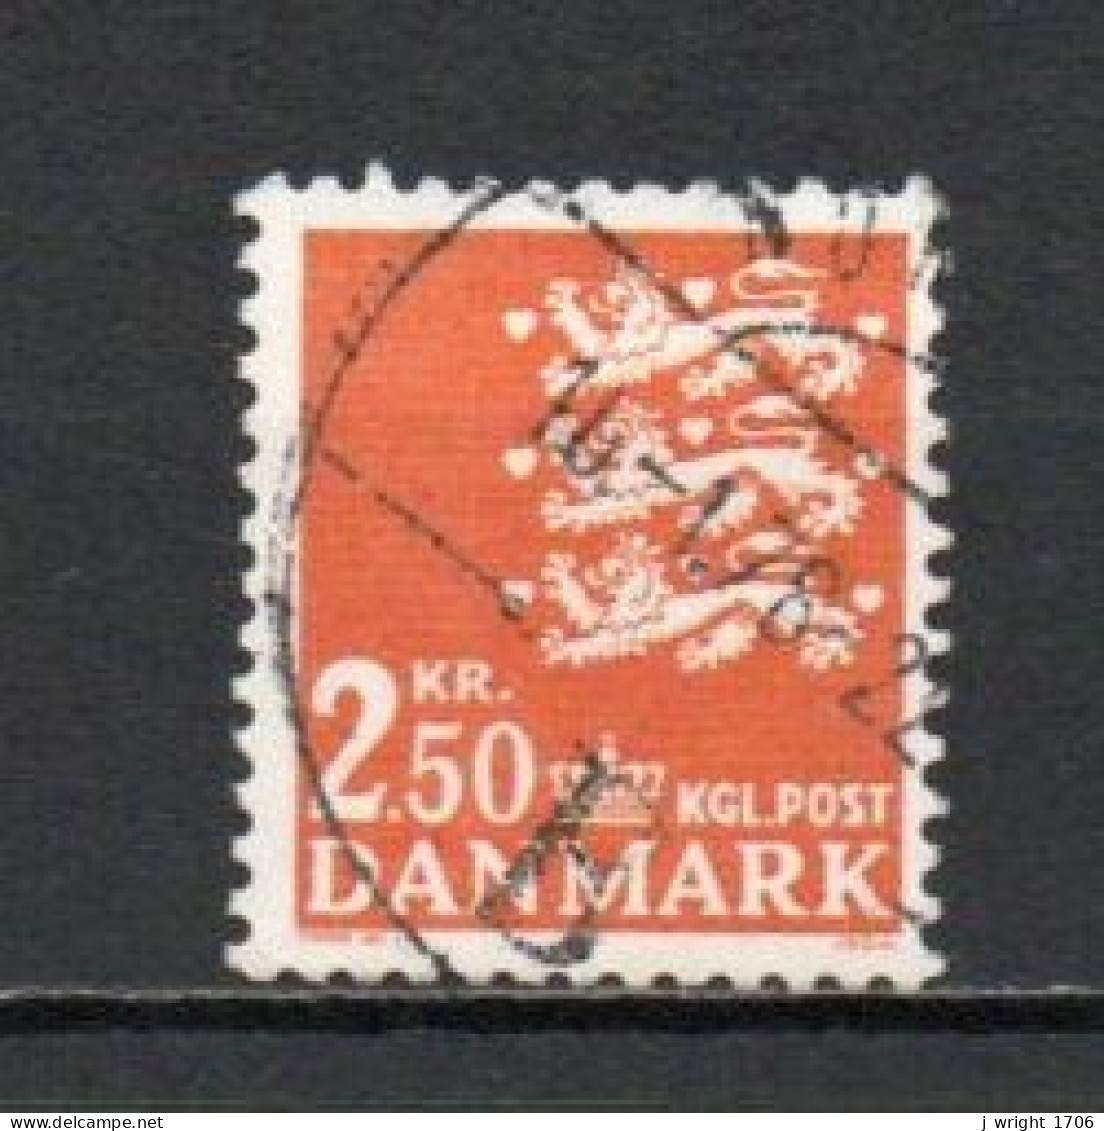 Denmark, 1972, Coat Of Arms, 2.50kr, USED - Gebruikt